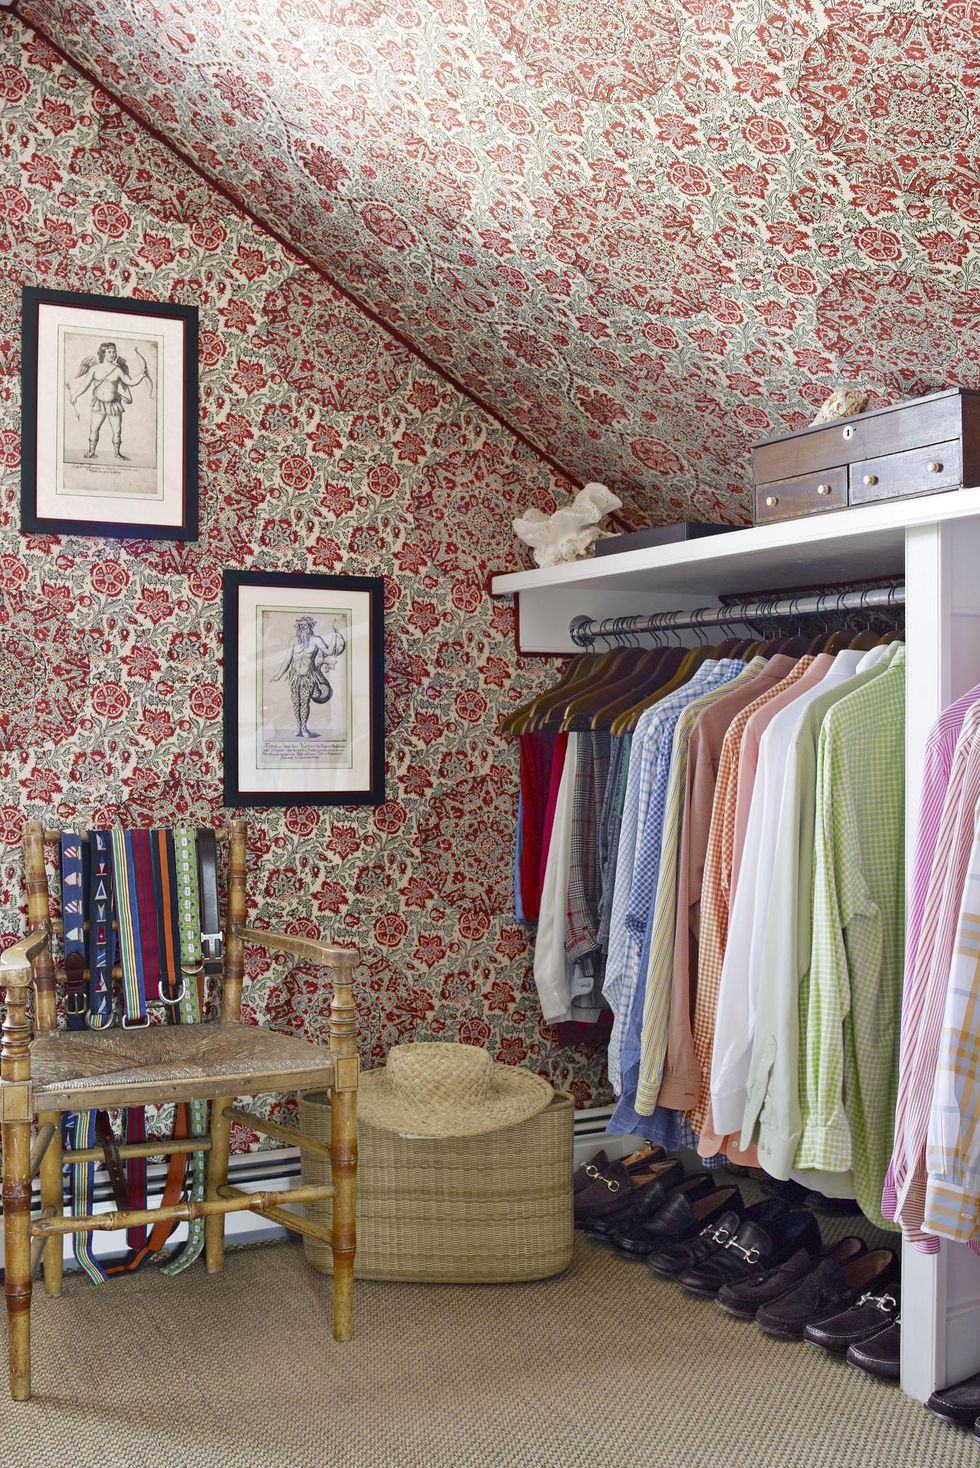 11 Clothes Storage Ideas When You Have No Closet